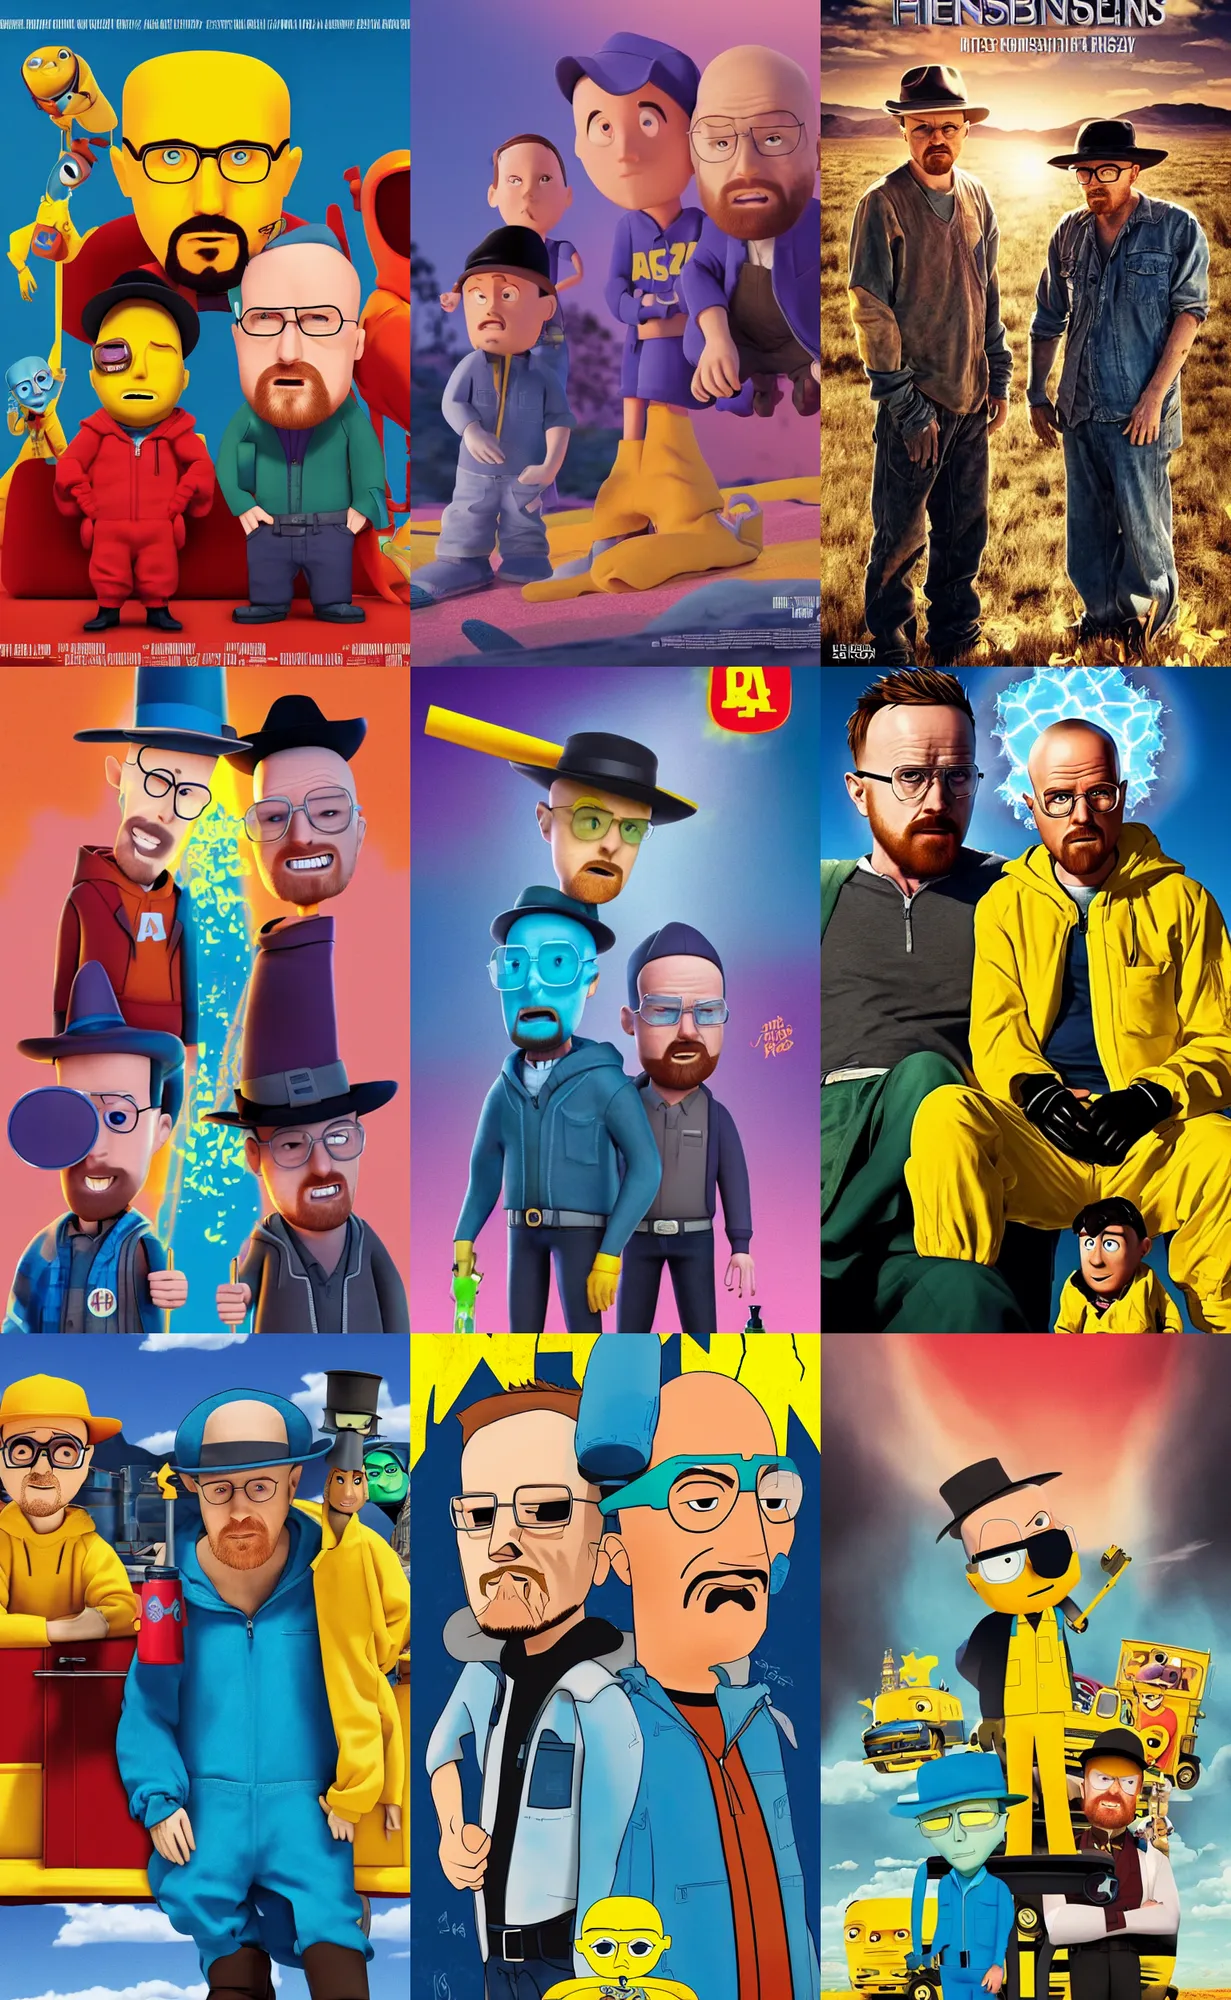 Prompt: heisenberg and jesse pinkman pixar film movie poster 2022